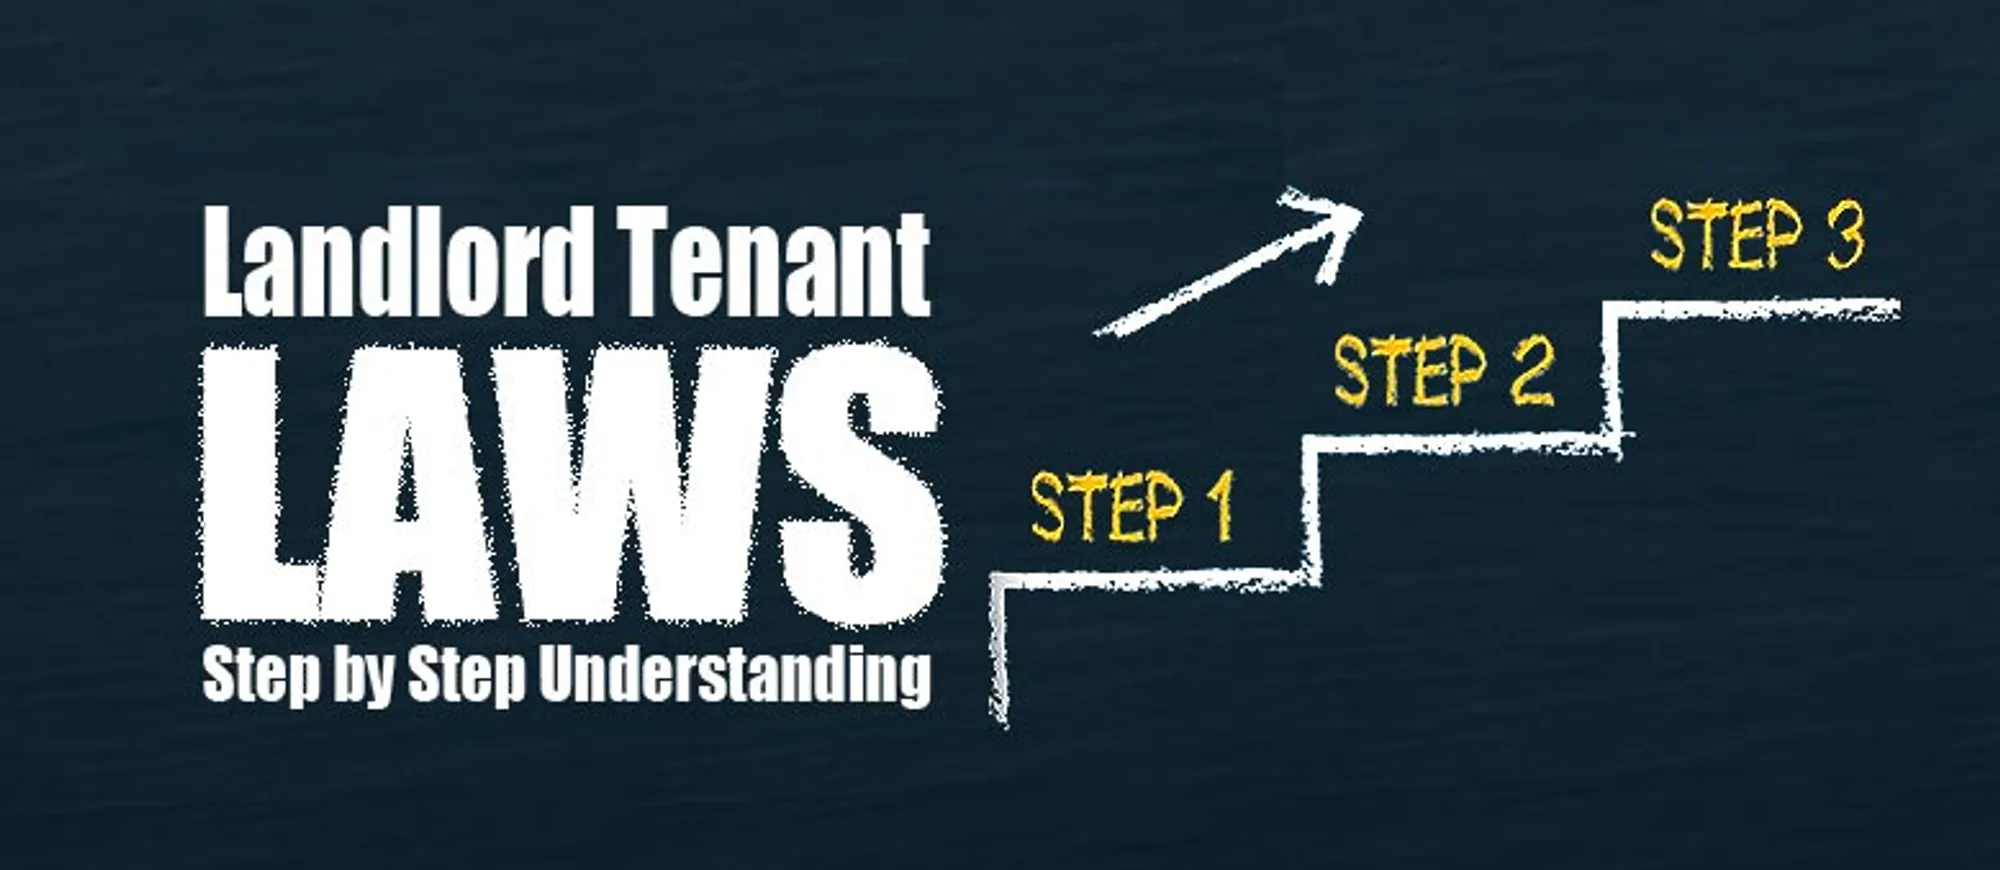 Landlord Tenant laws